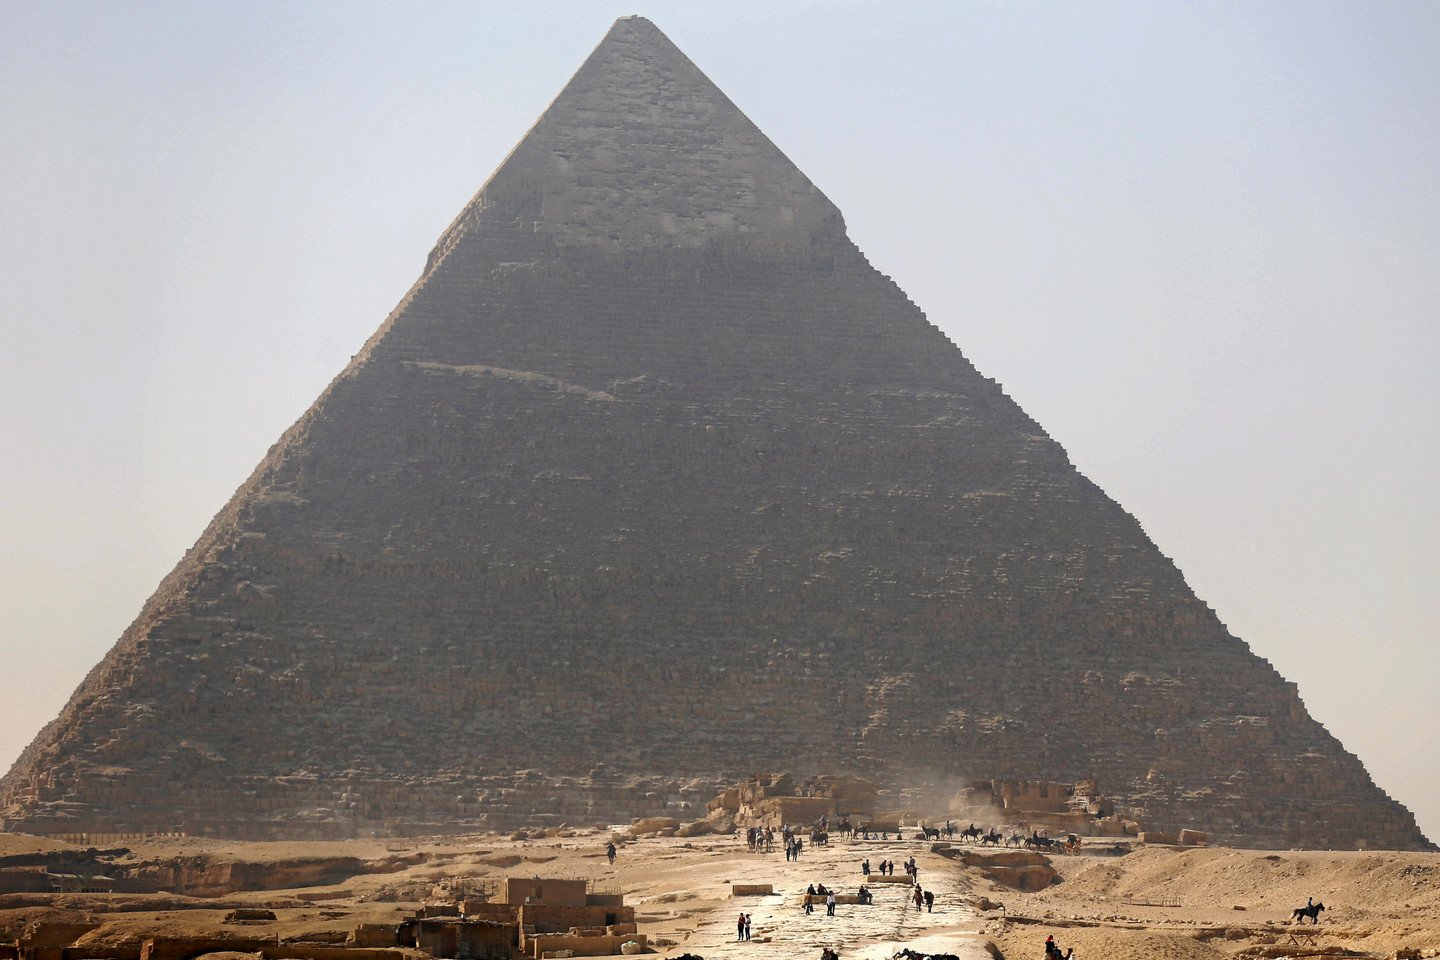  Piramidėje rasta iki šiol neištirta ertmė. <br> Reuters/Scanpix nuotr.